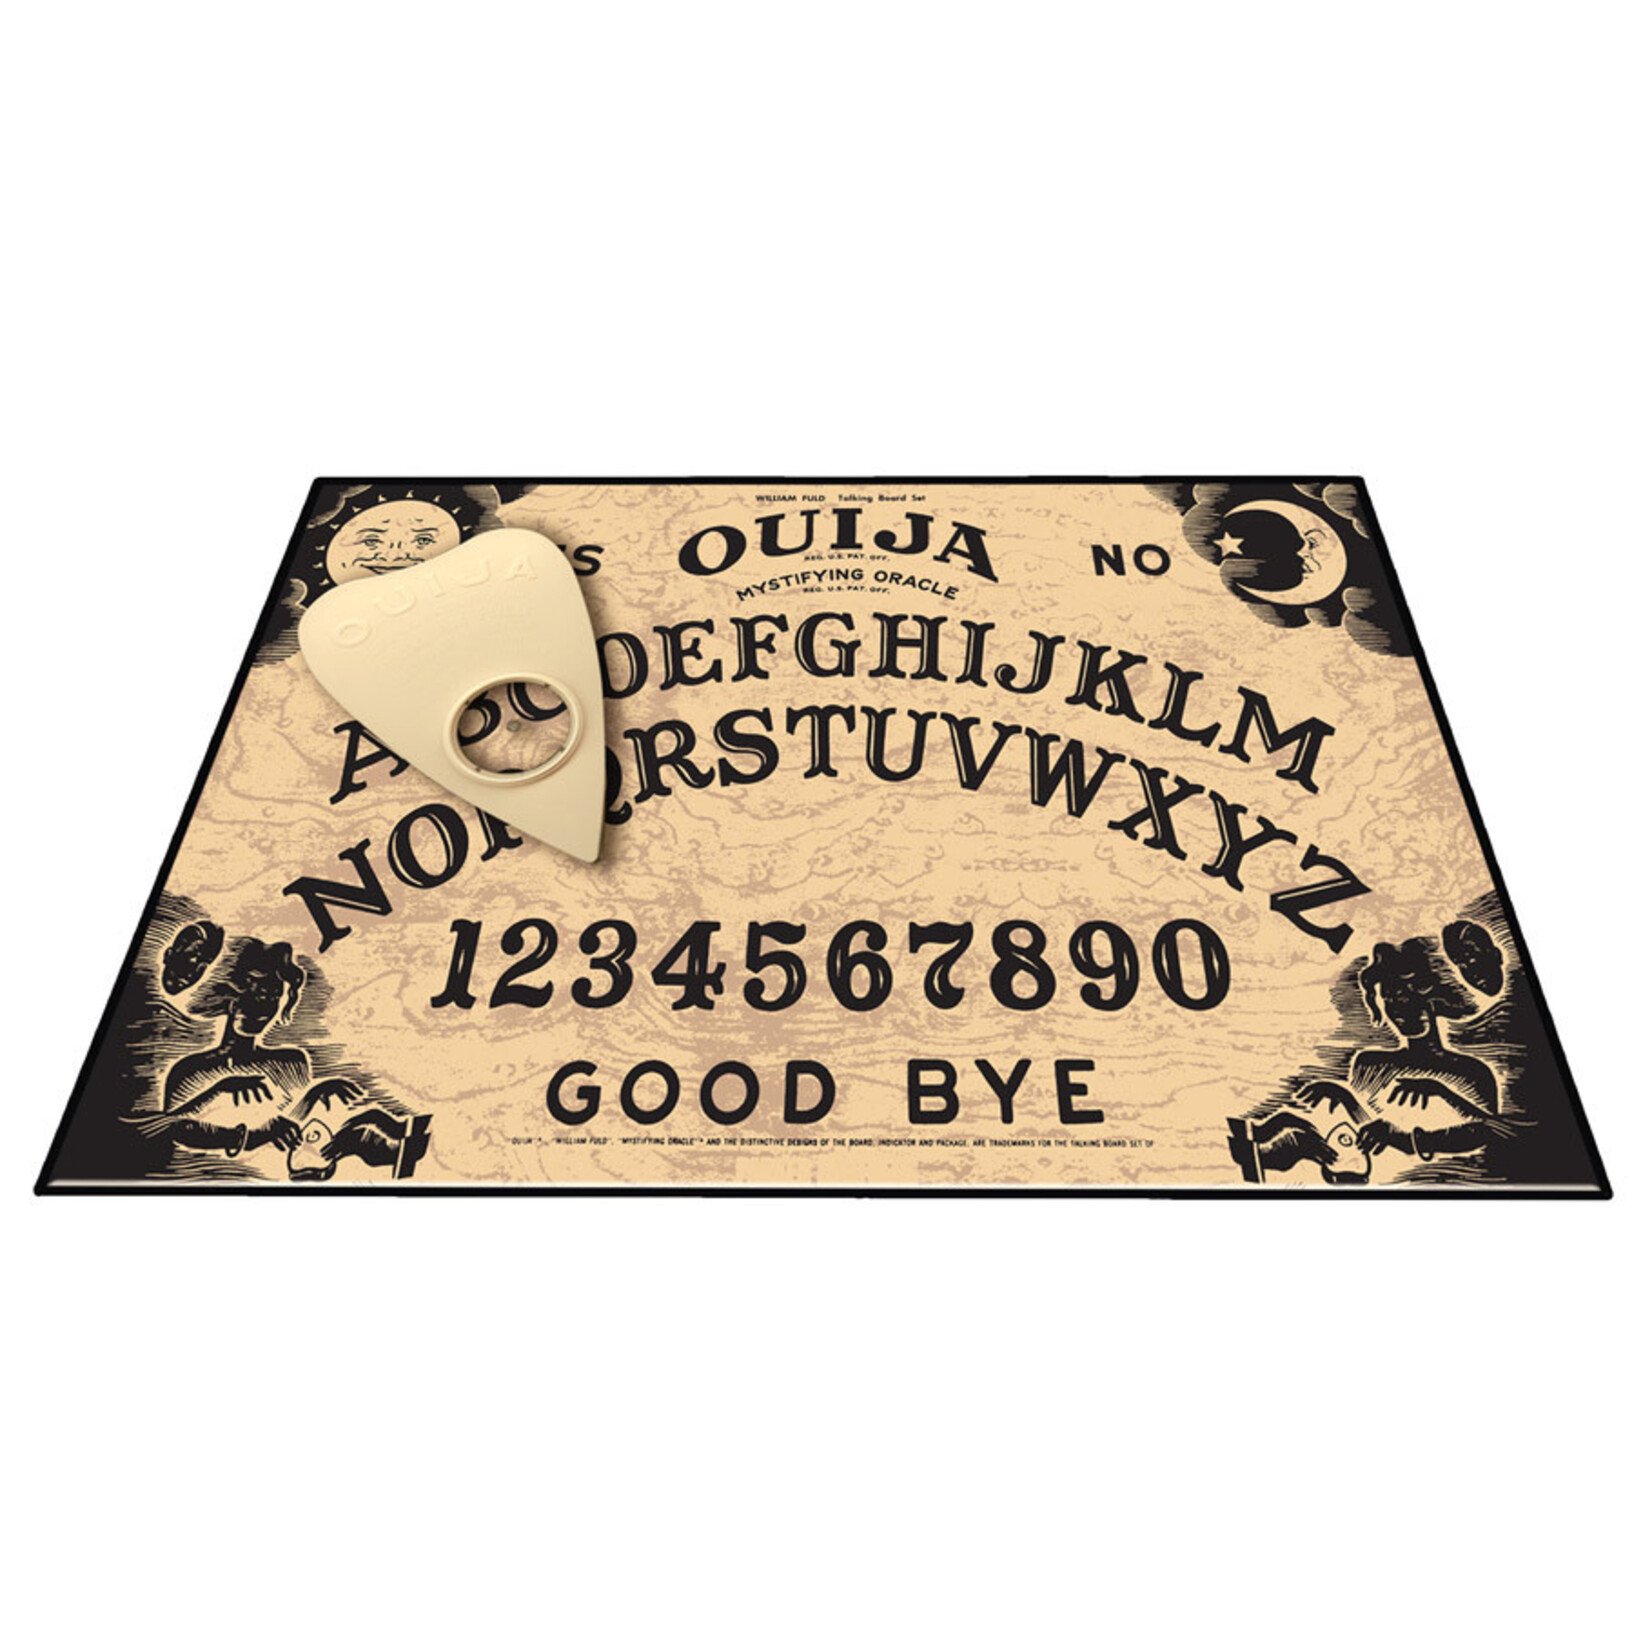 Winning Moves Games Ouija Board